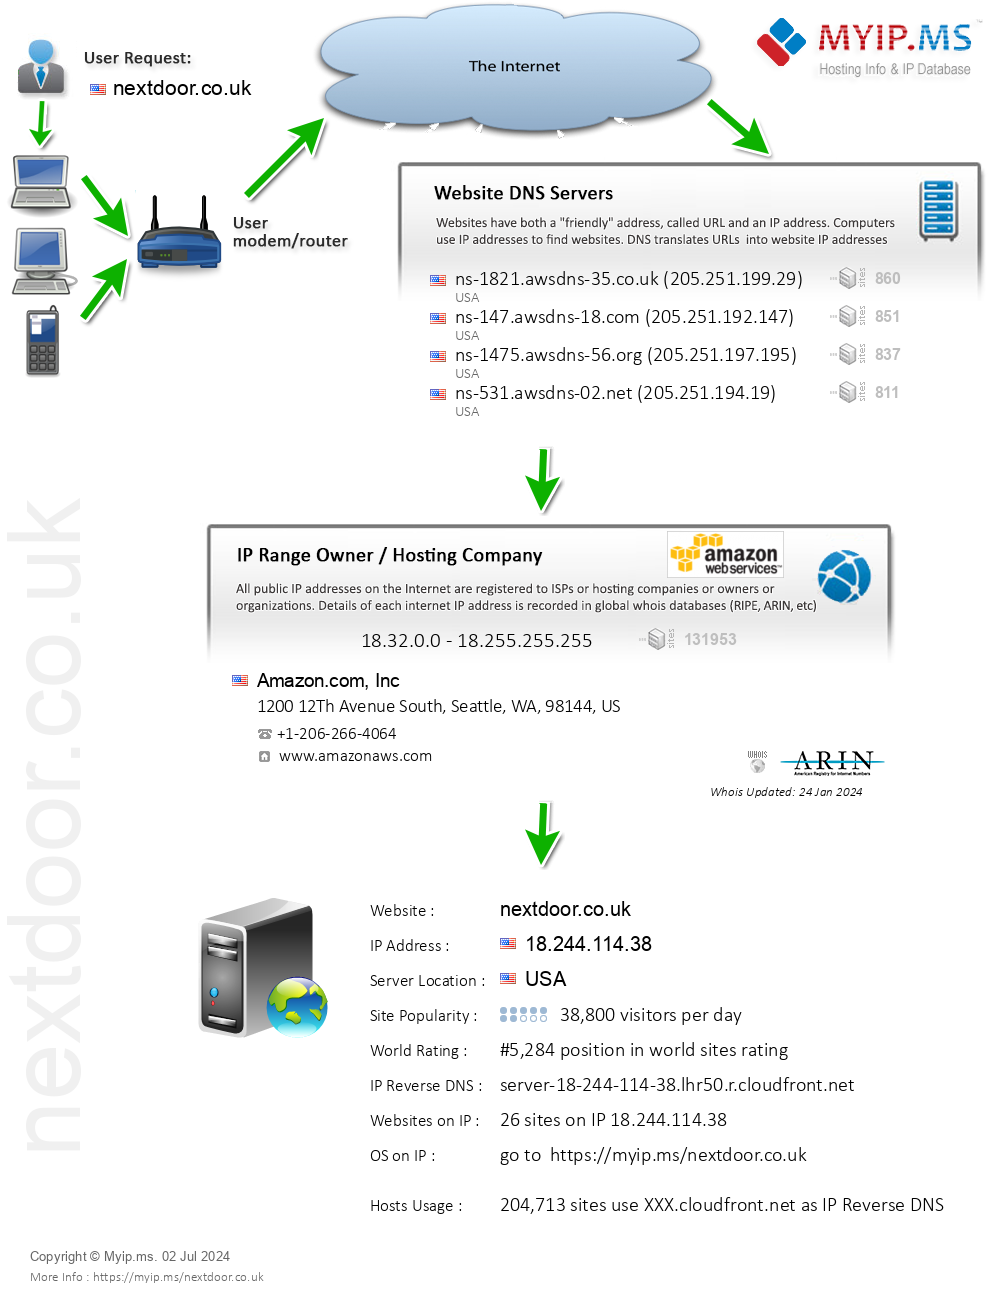 Nextdoor.co.uk - Website Hosting Visual IP Diagram